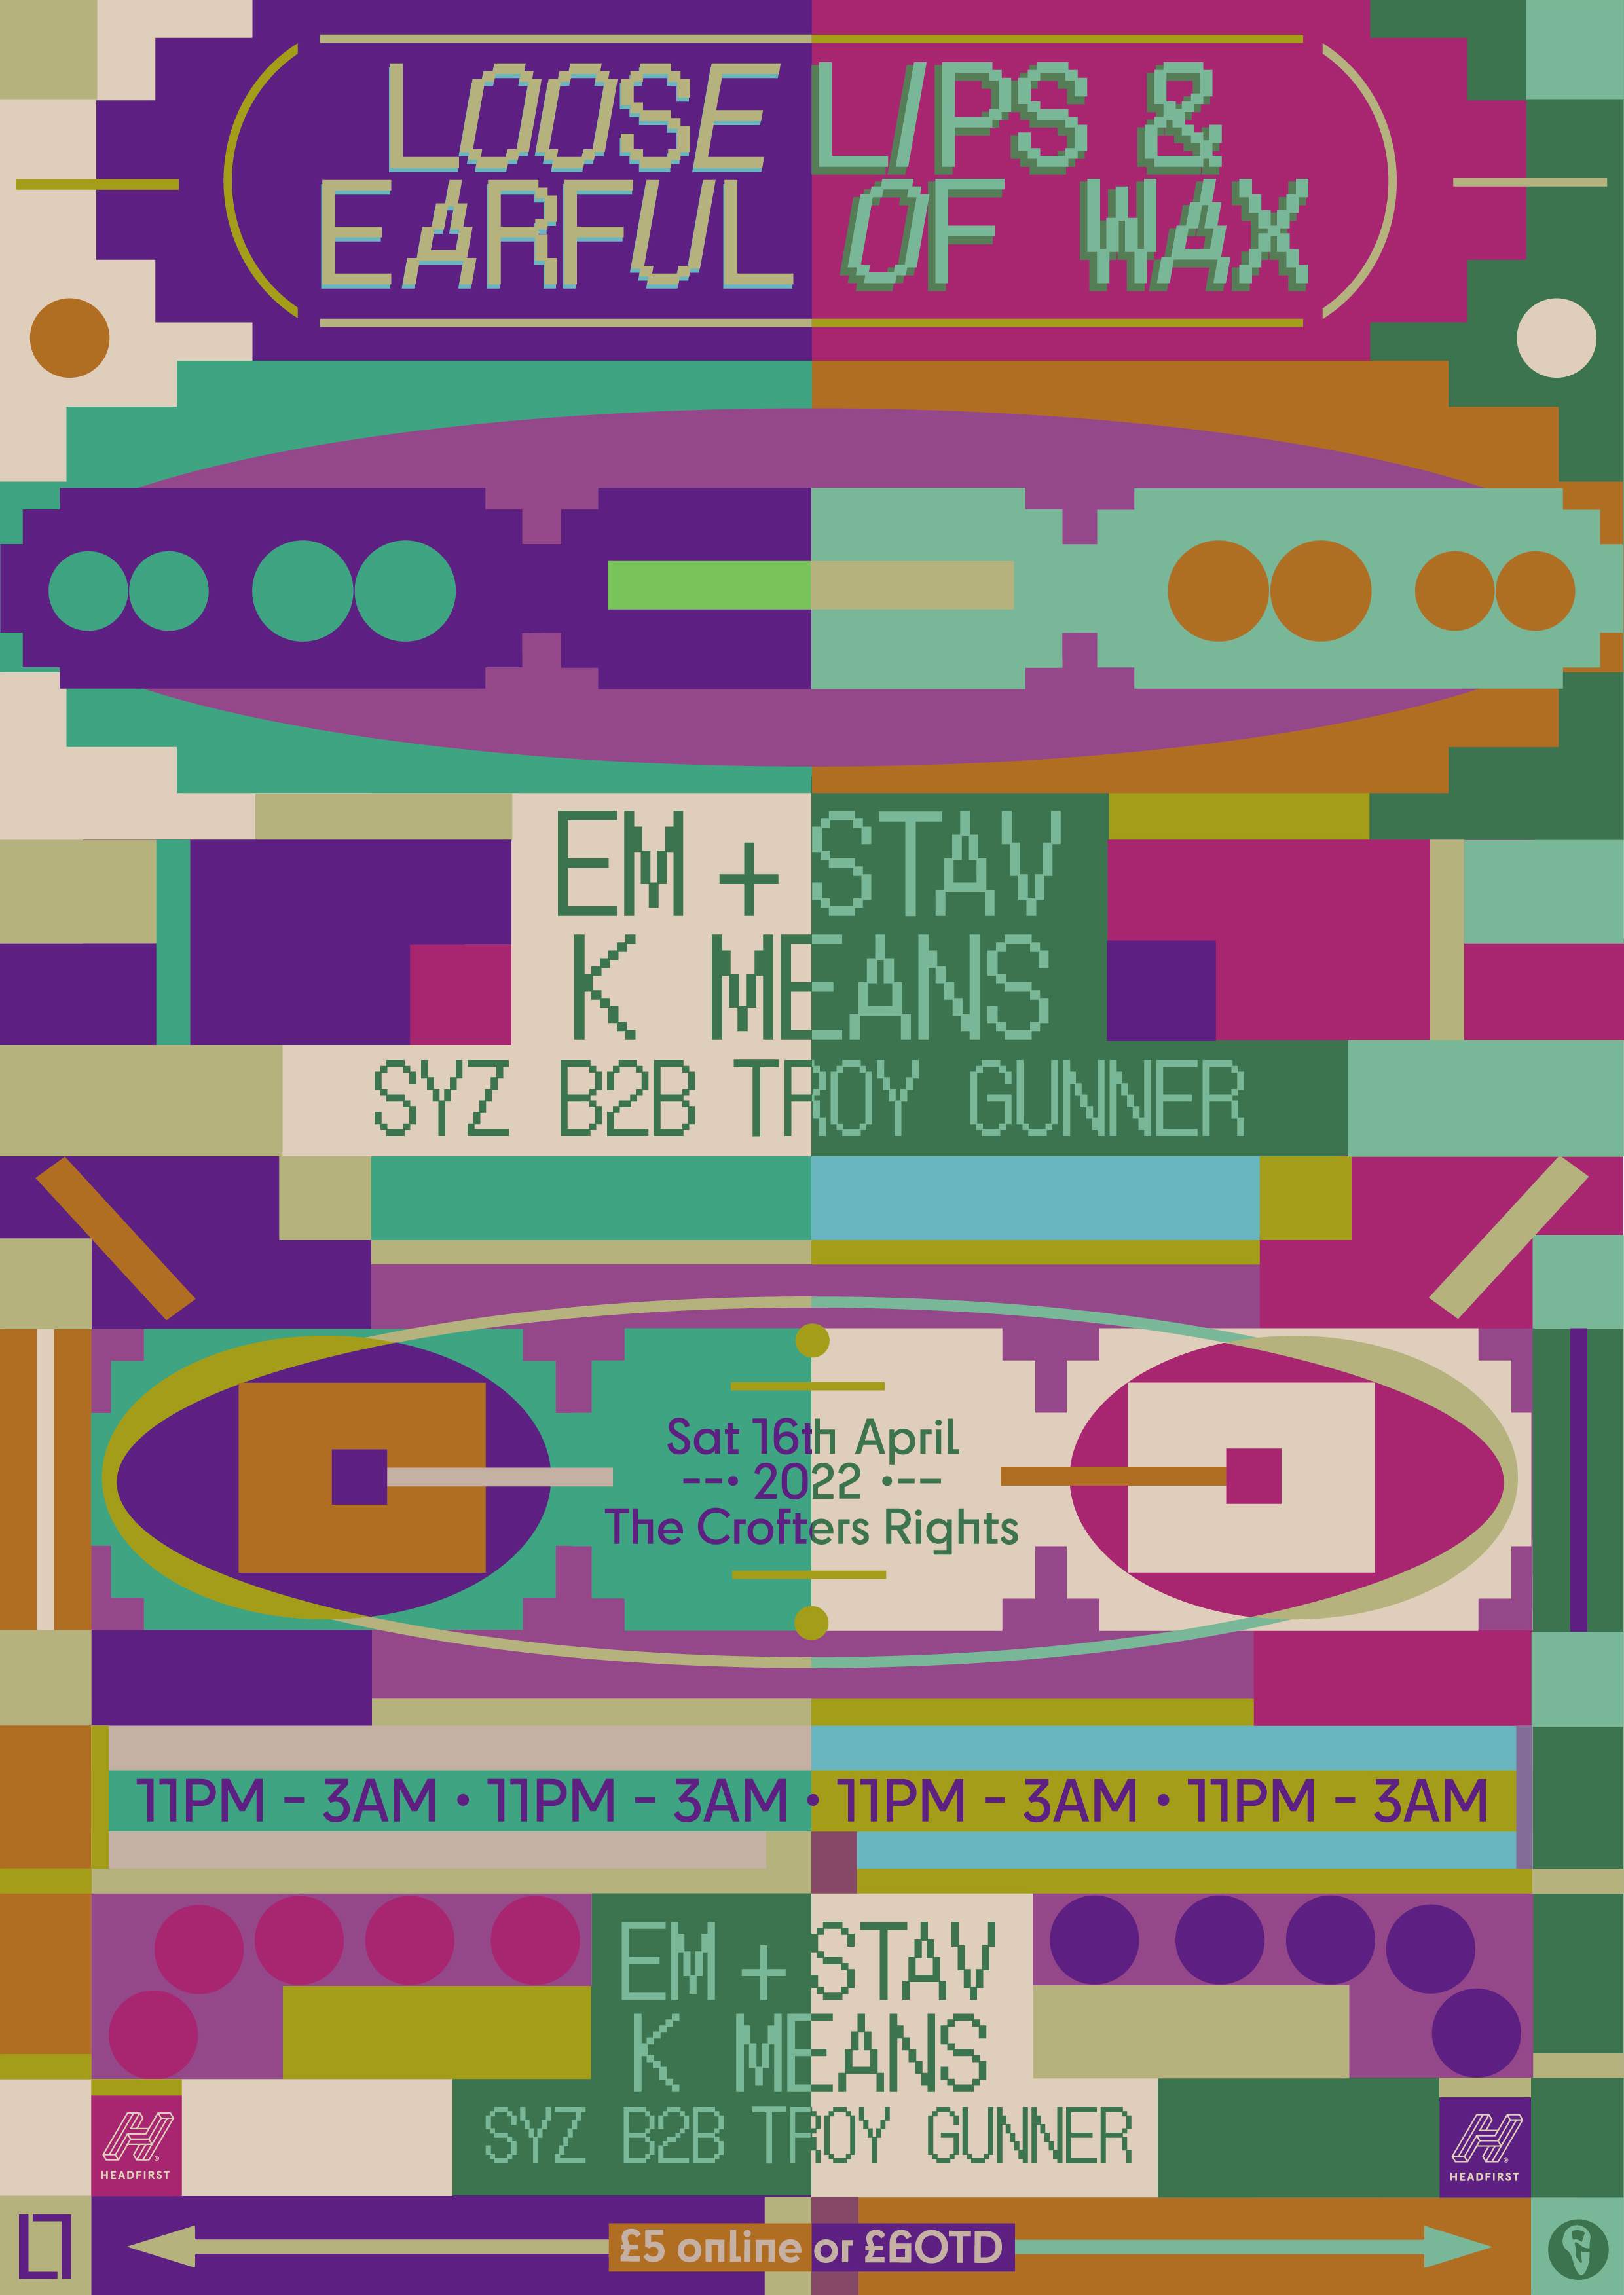 EM + STAV, k means, Syz B2B Troy Gunner (Loose Lips x Earful of Wax) - フライヤー表